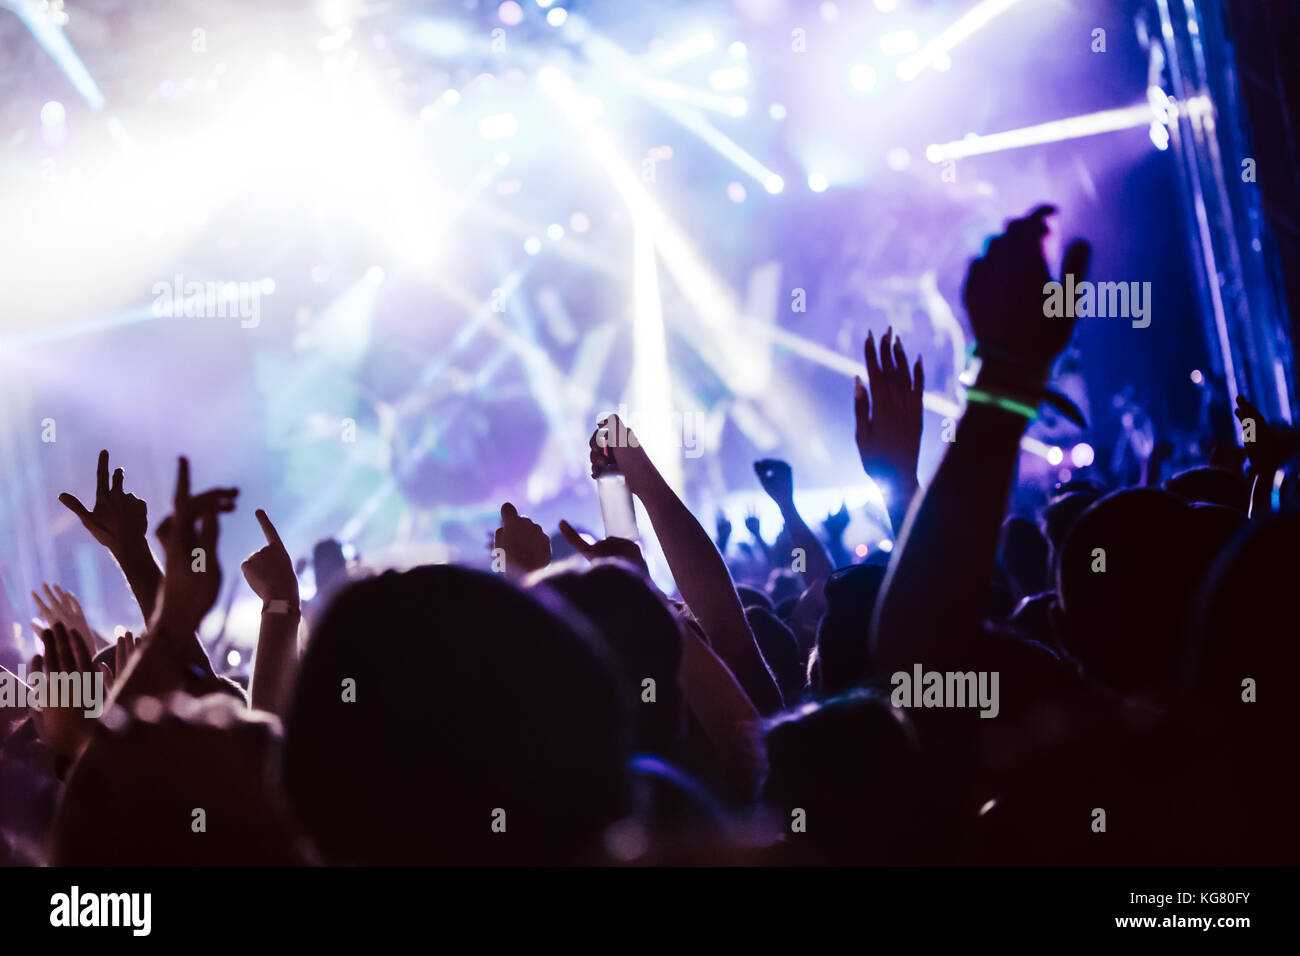 Cheering crowd at concert enjoying music performance Stock Photo - Alamy